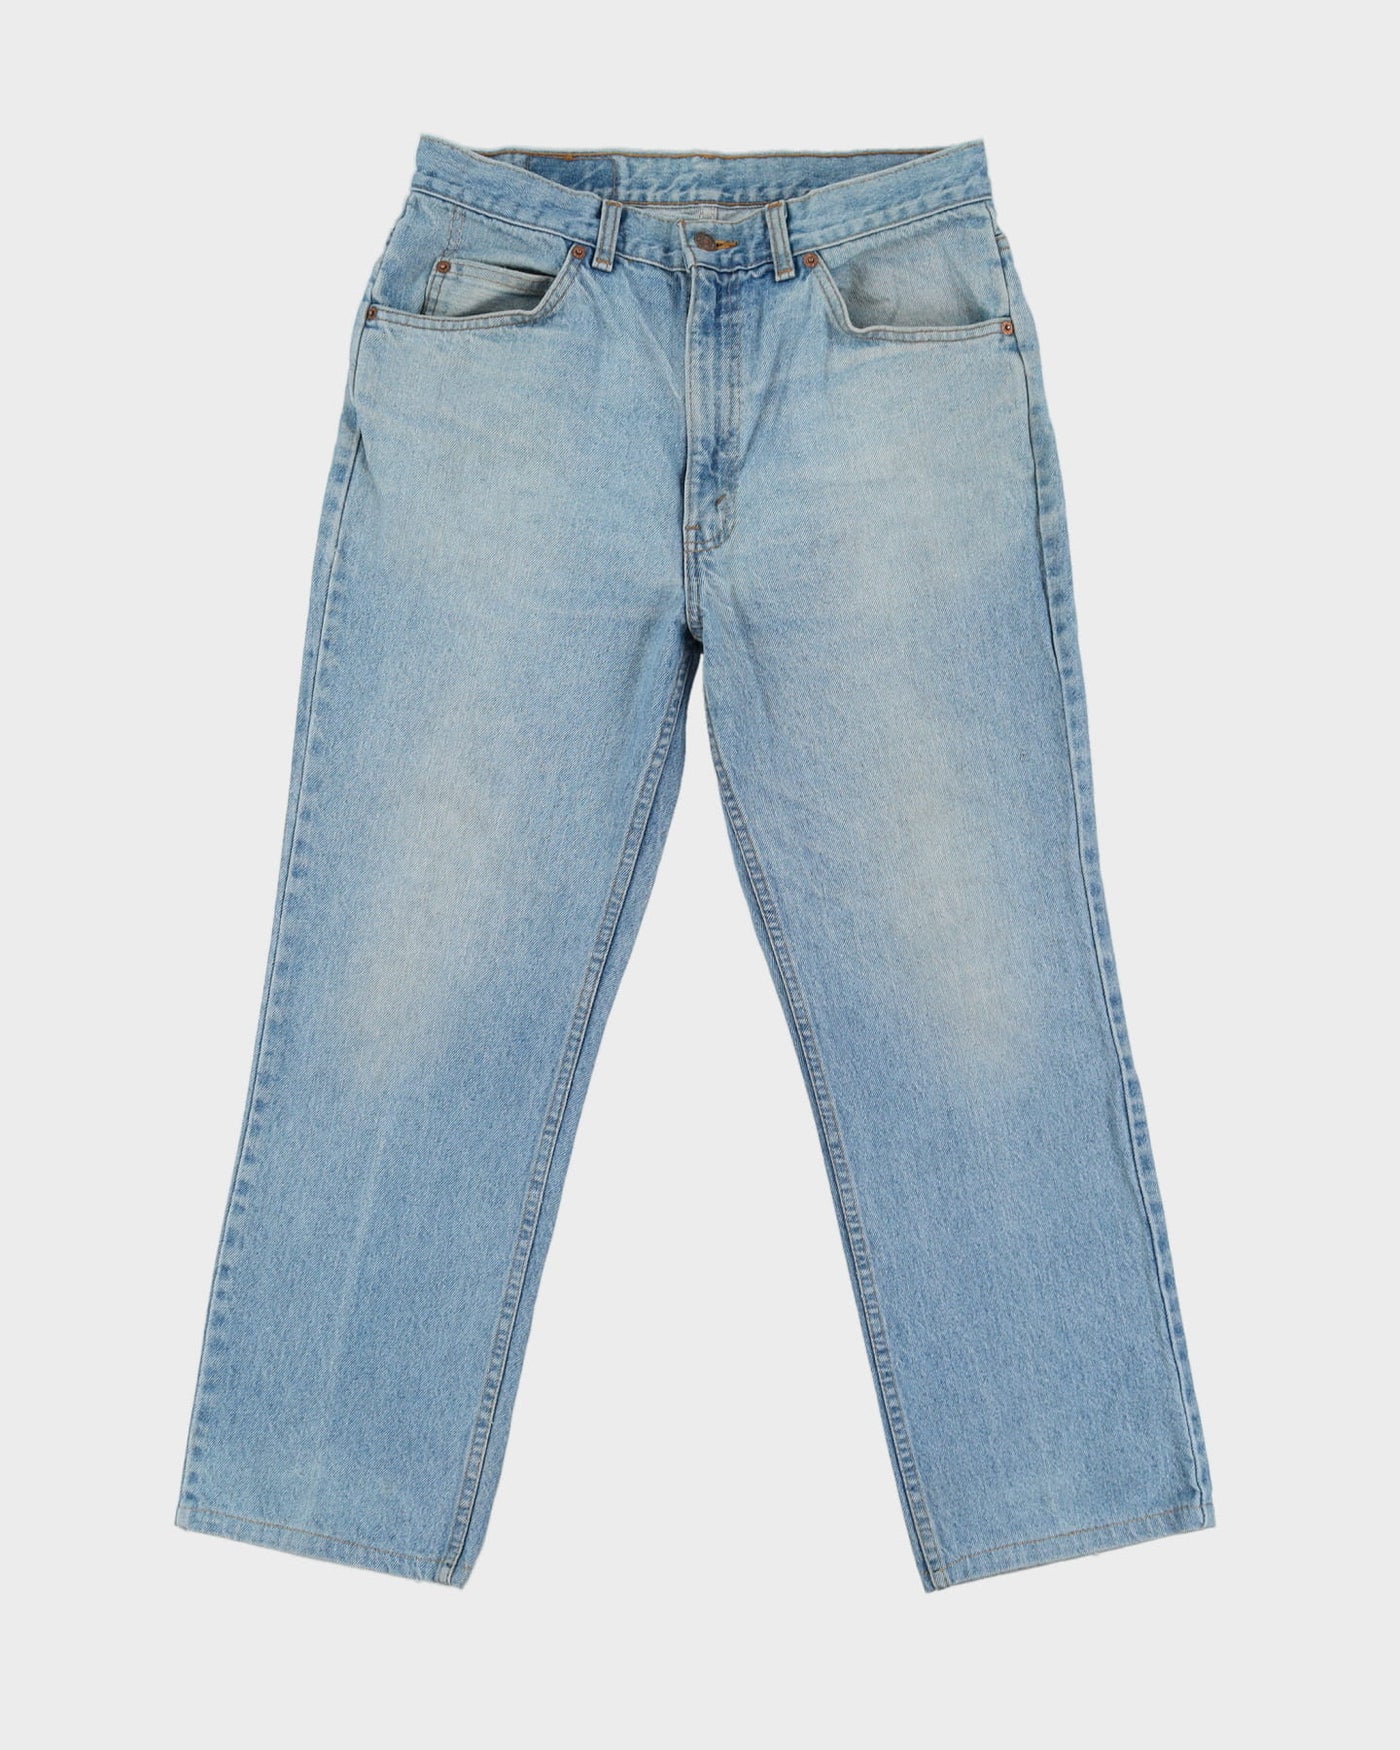 Vintage 80s Levi's Orange Tab Medium Wash Blue Jeans - W33 L27